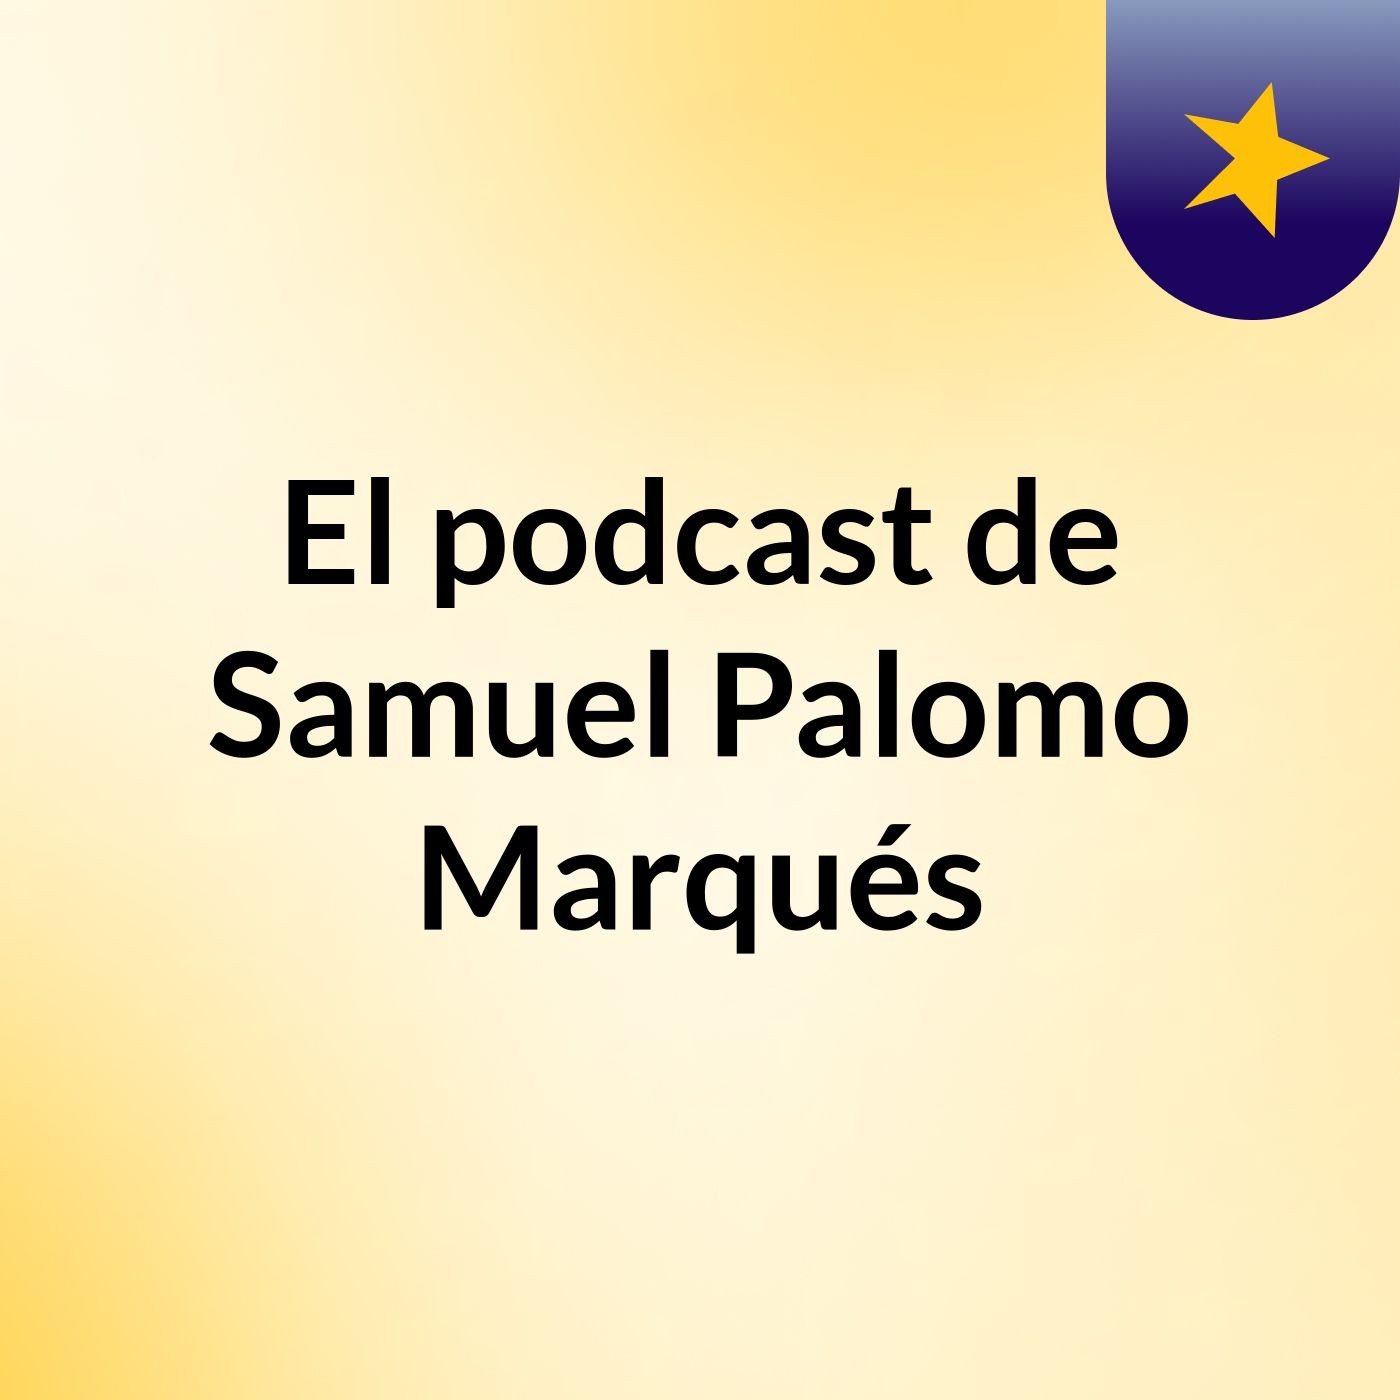 El podcast de Samuel Palomo Marqués